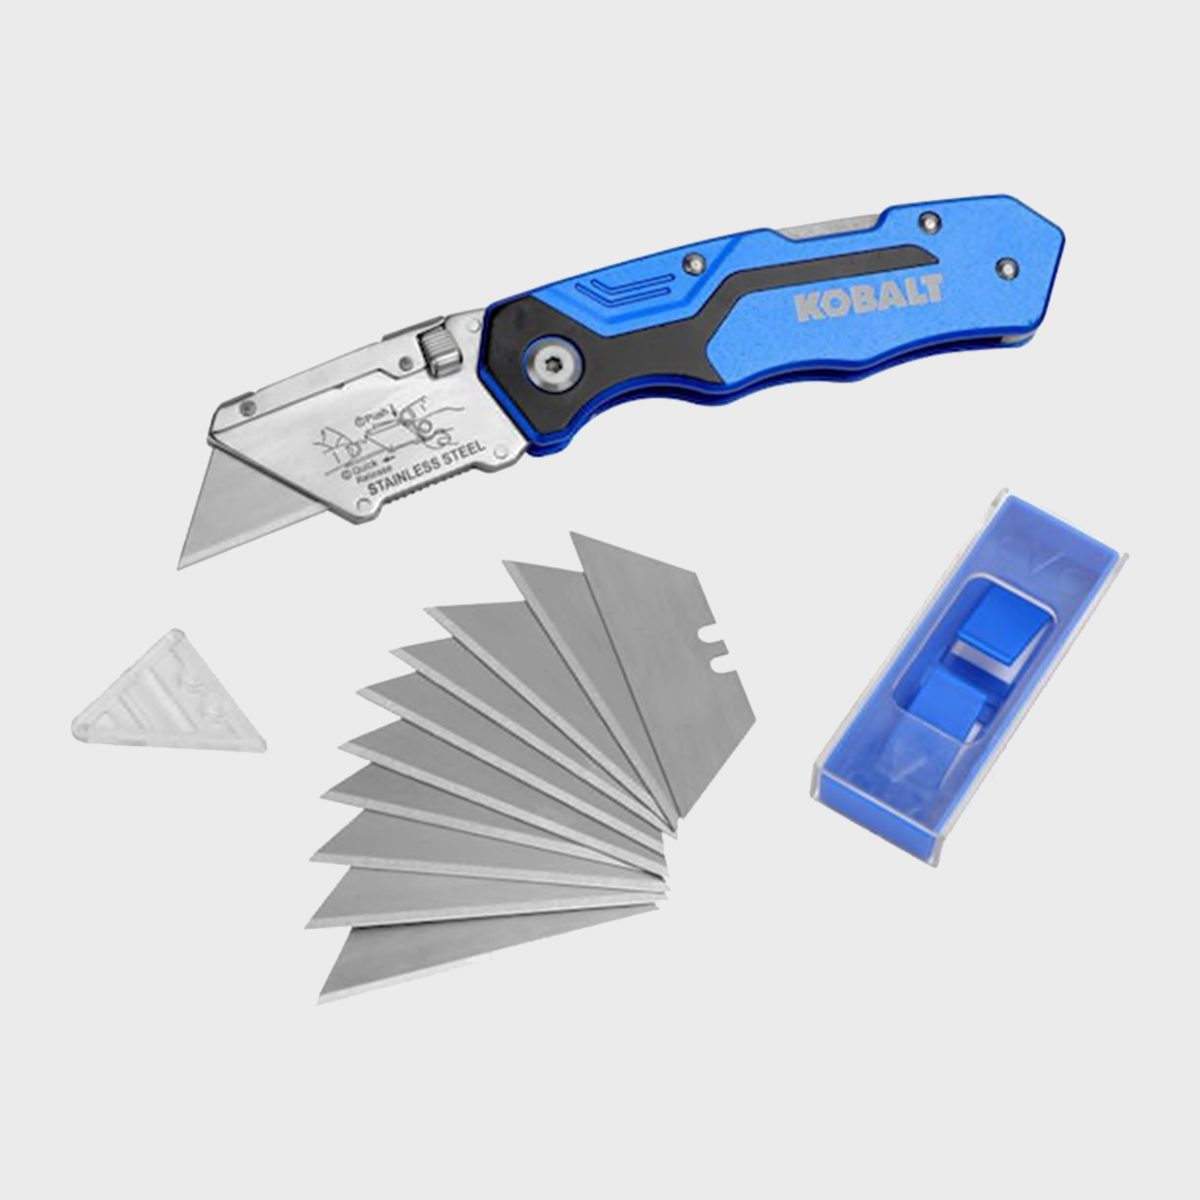 Kobalt 18mm Folding Utility Knife Via Lowes